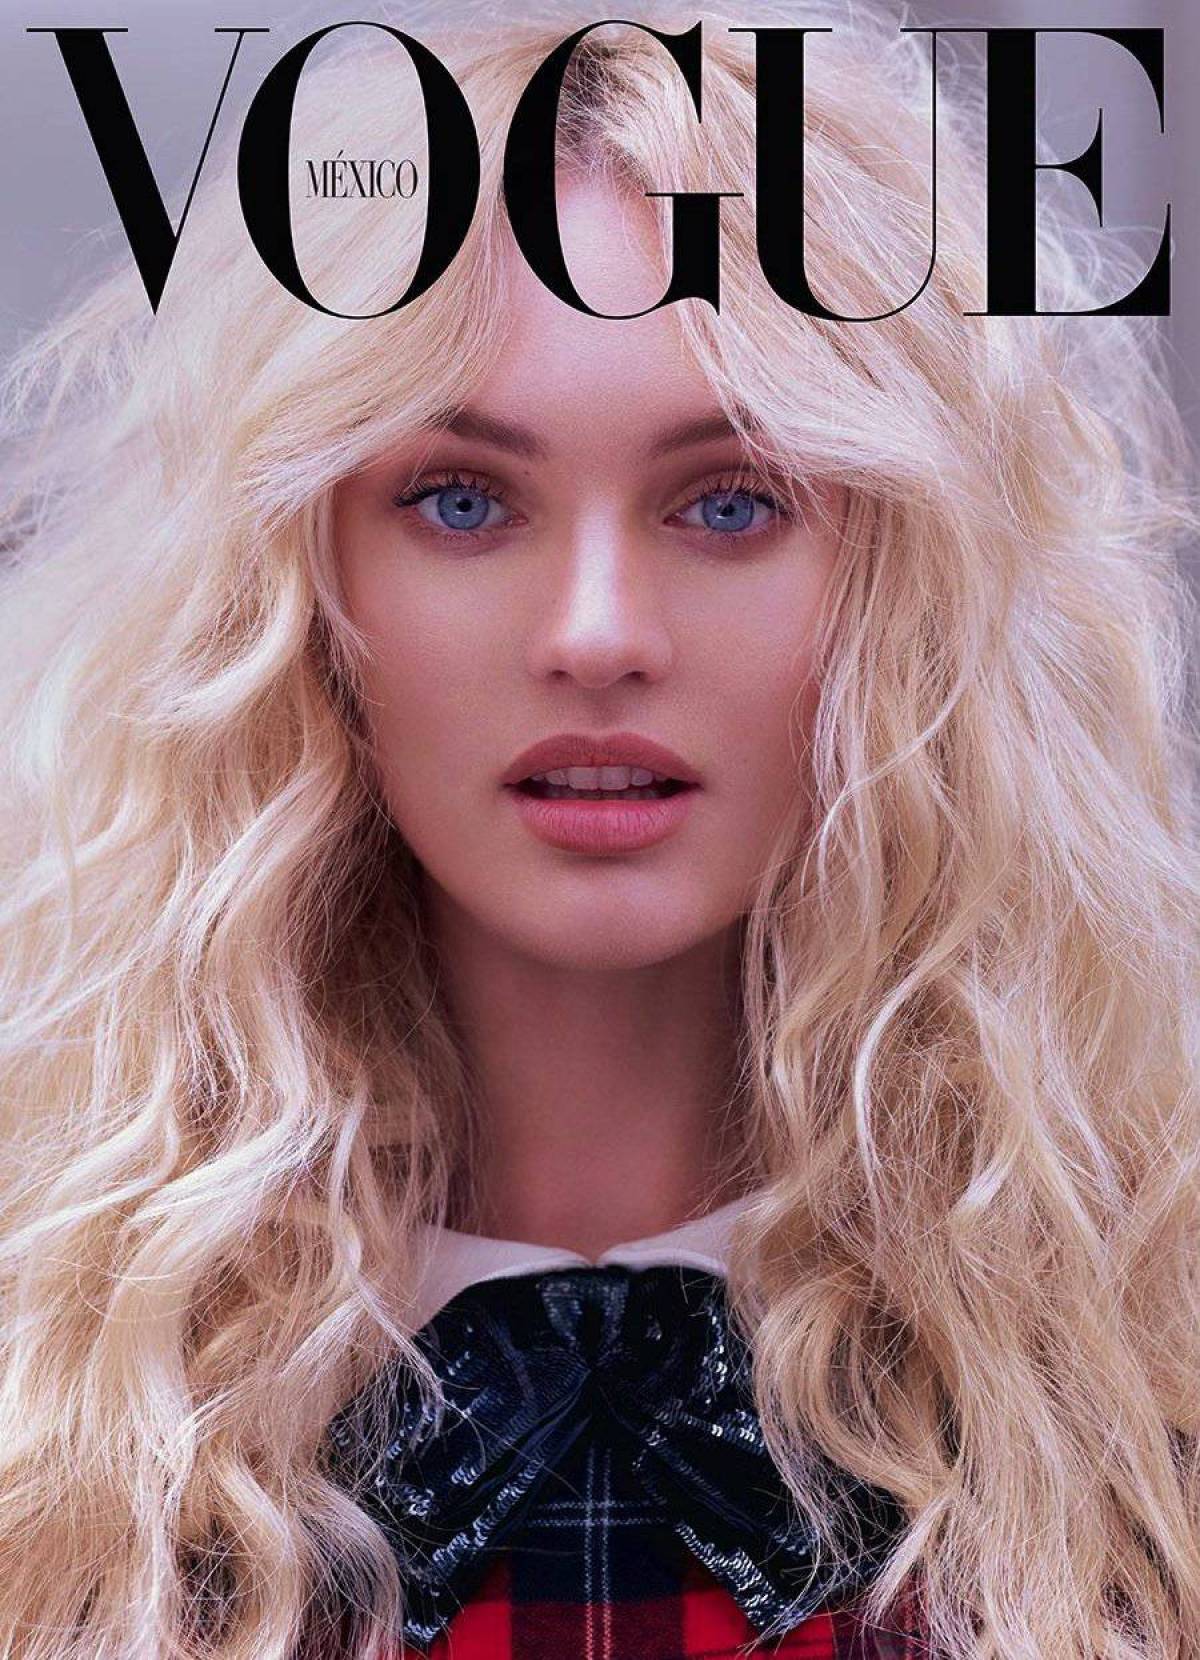 Vogue #16